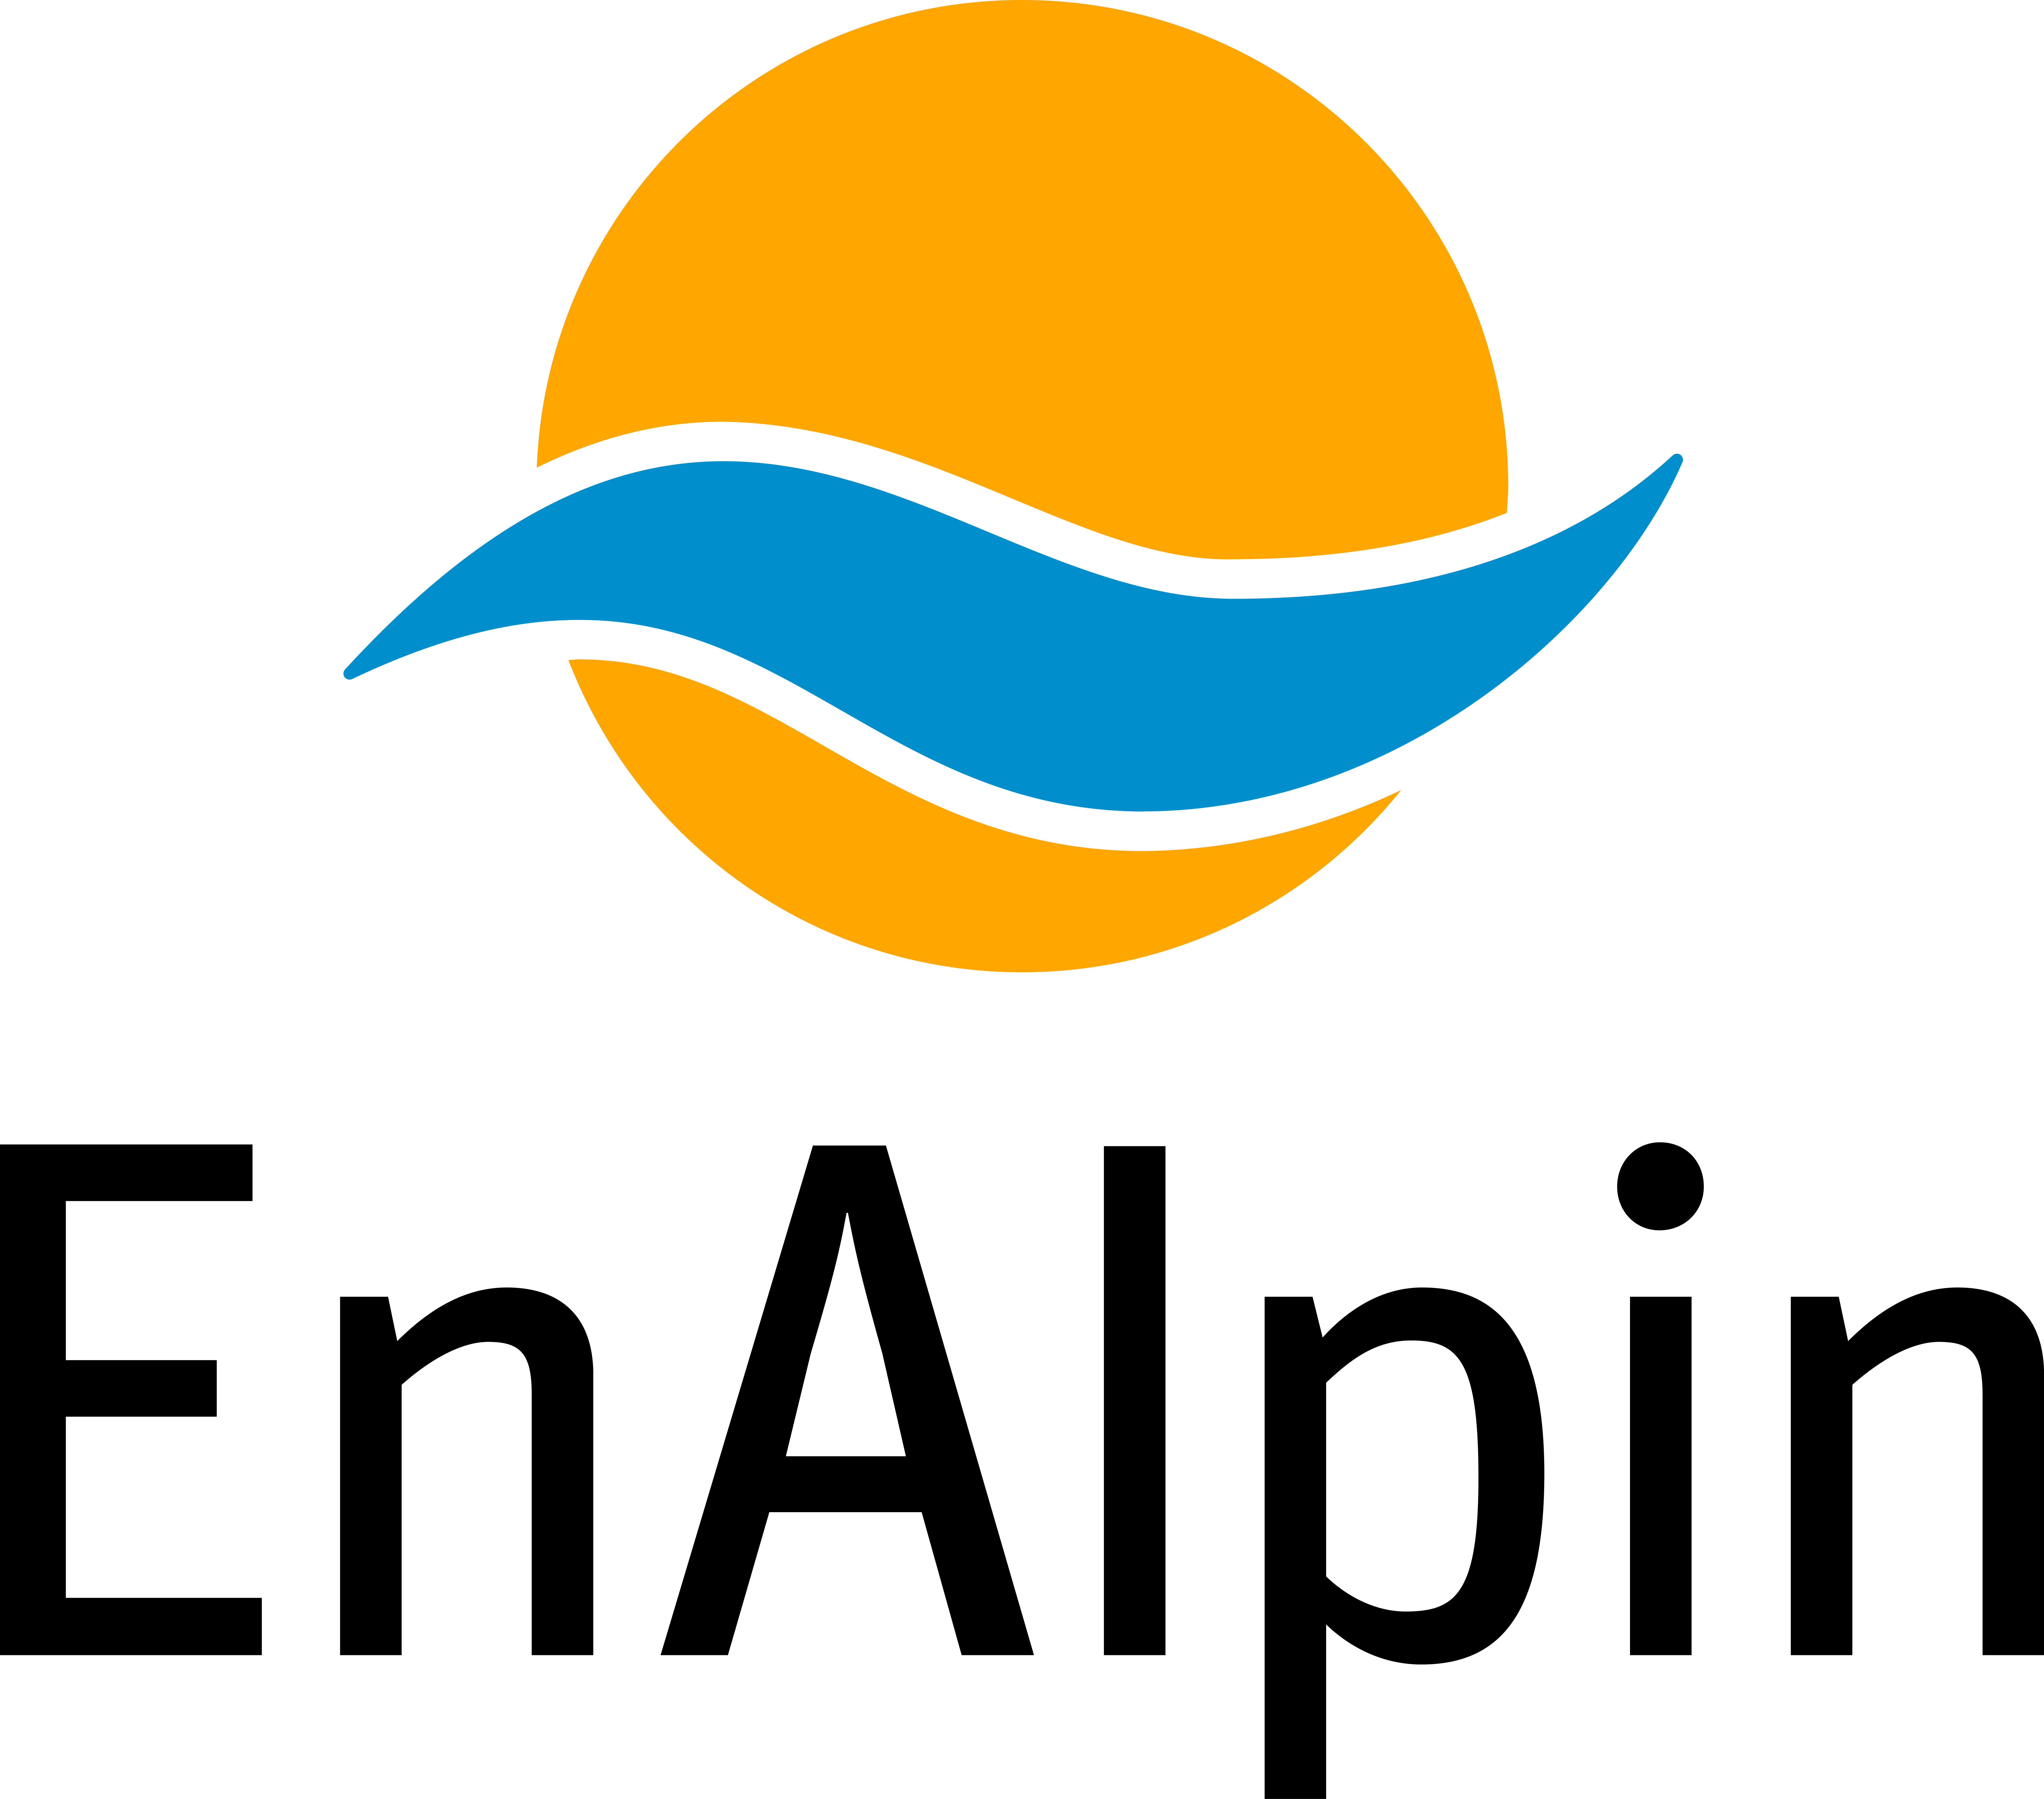 EnAlpin AG